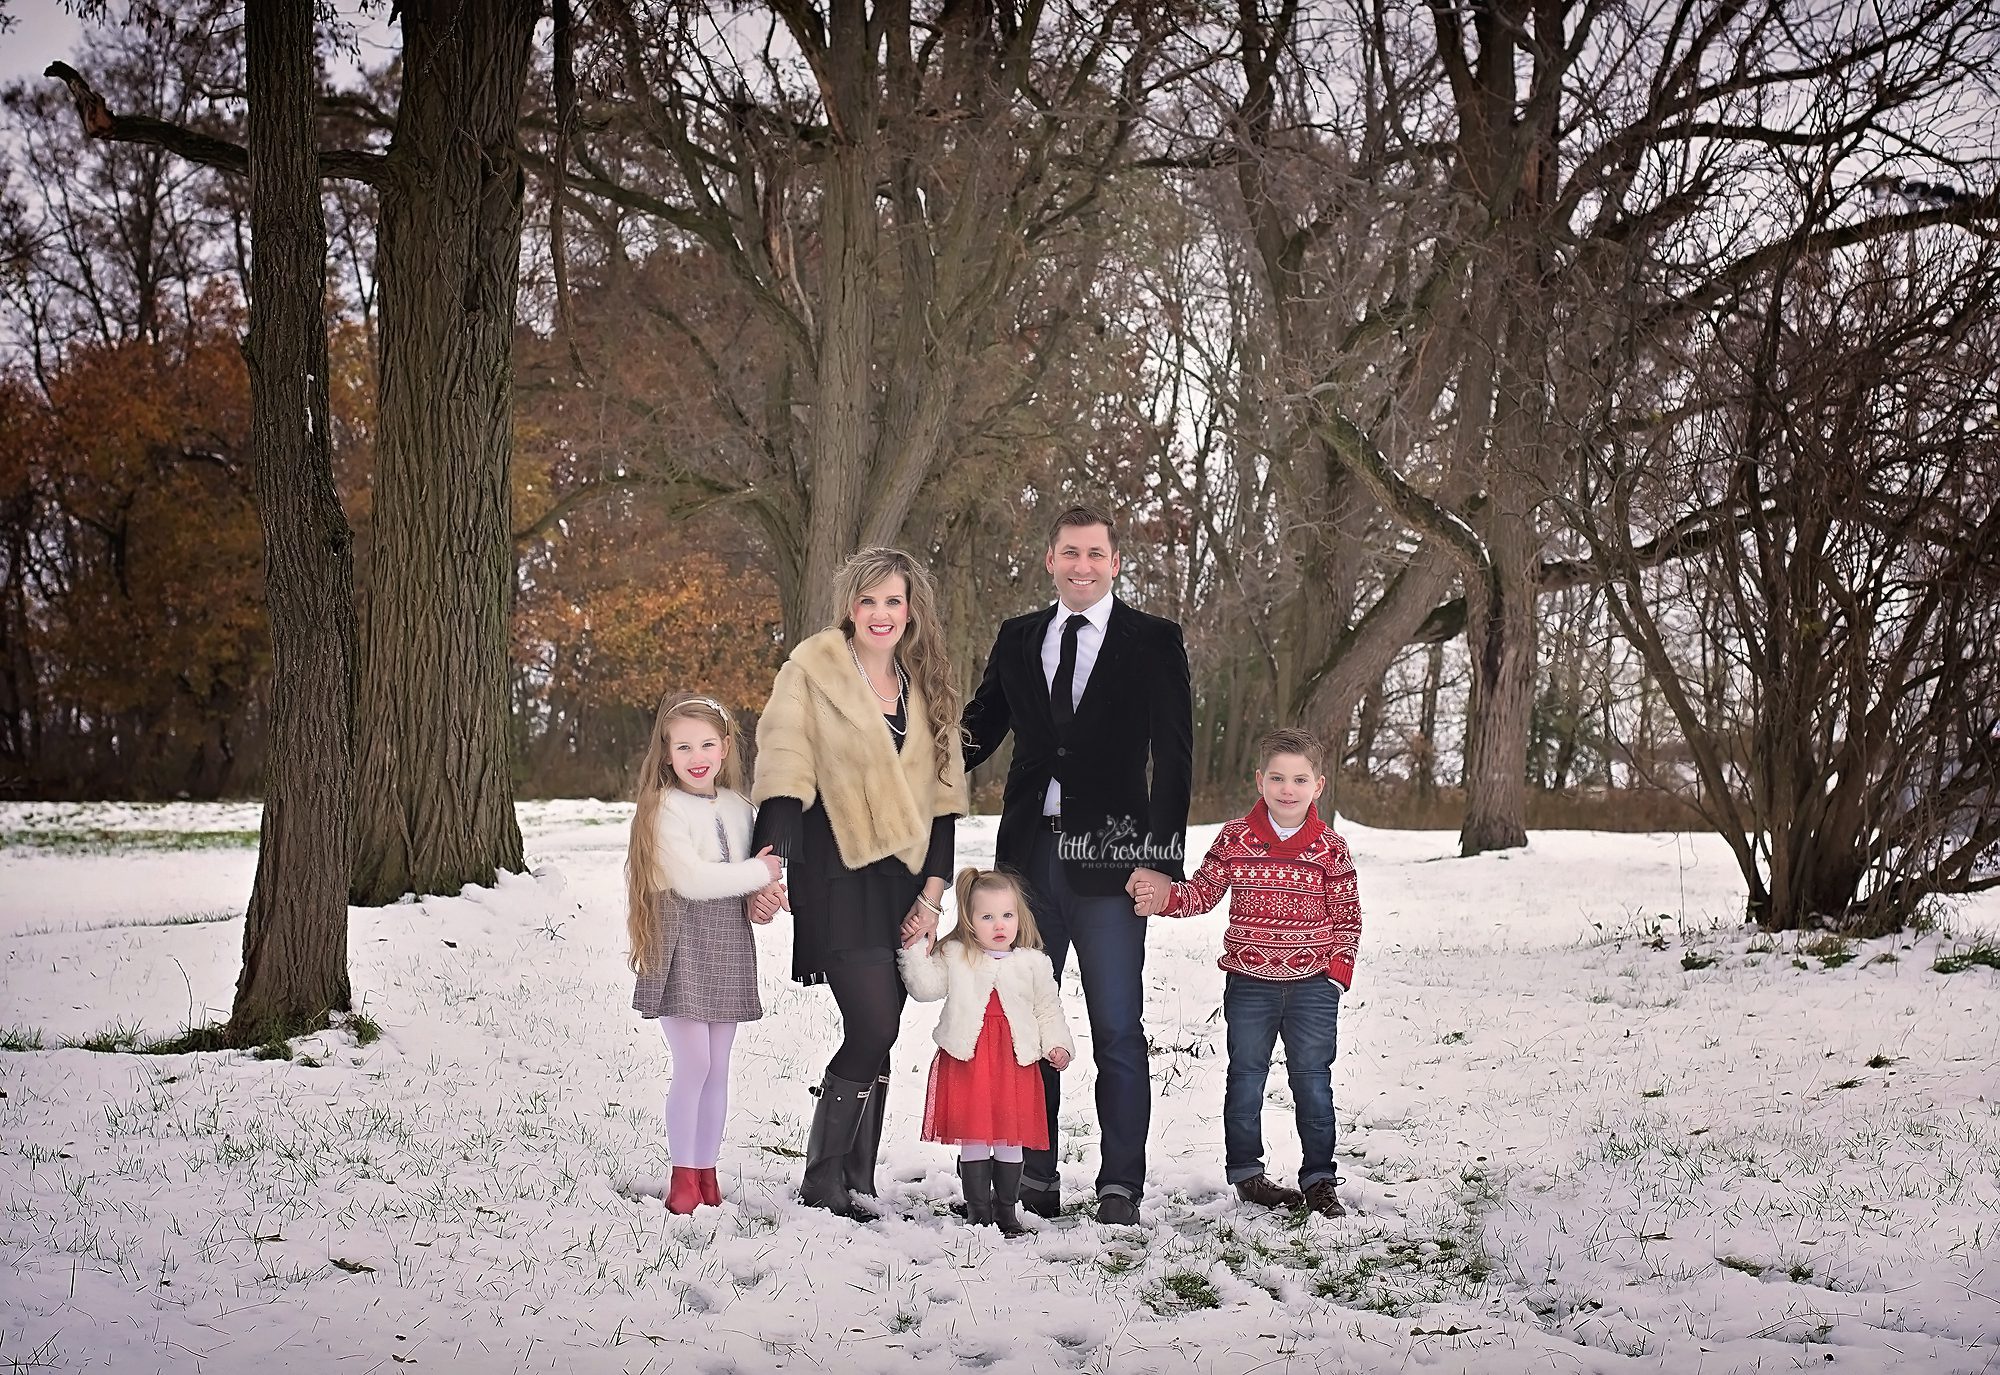 Outdoor winter family photo